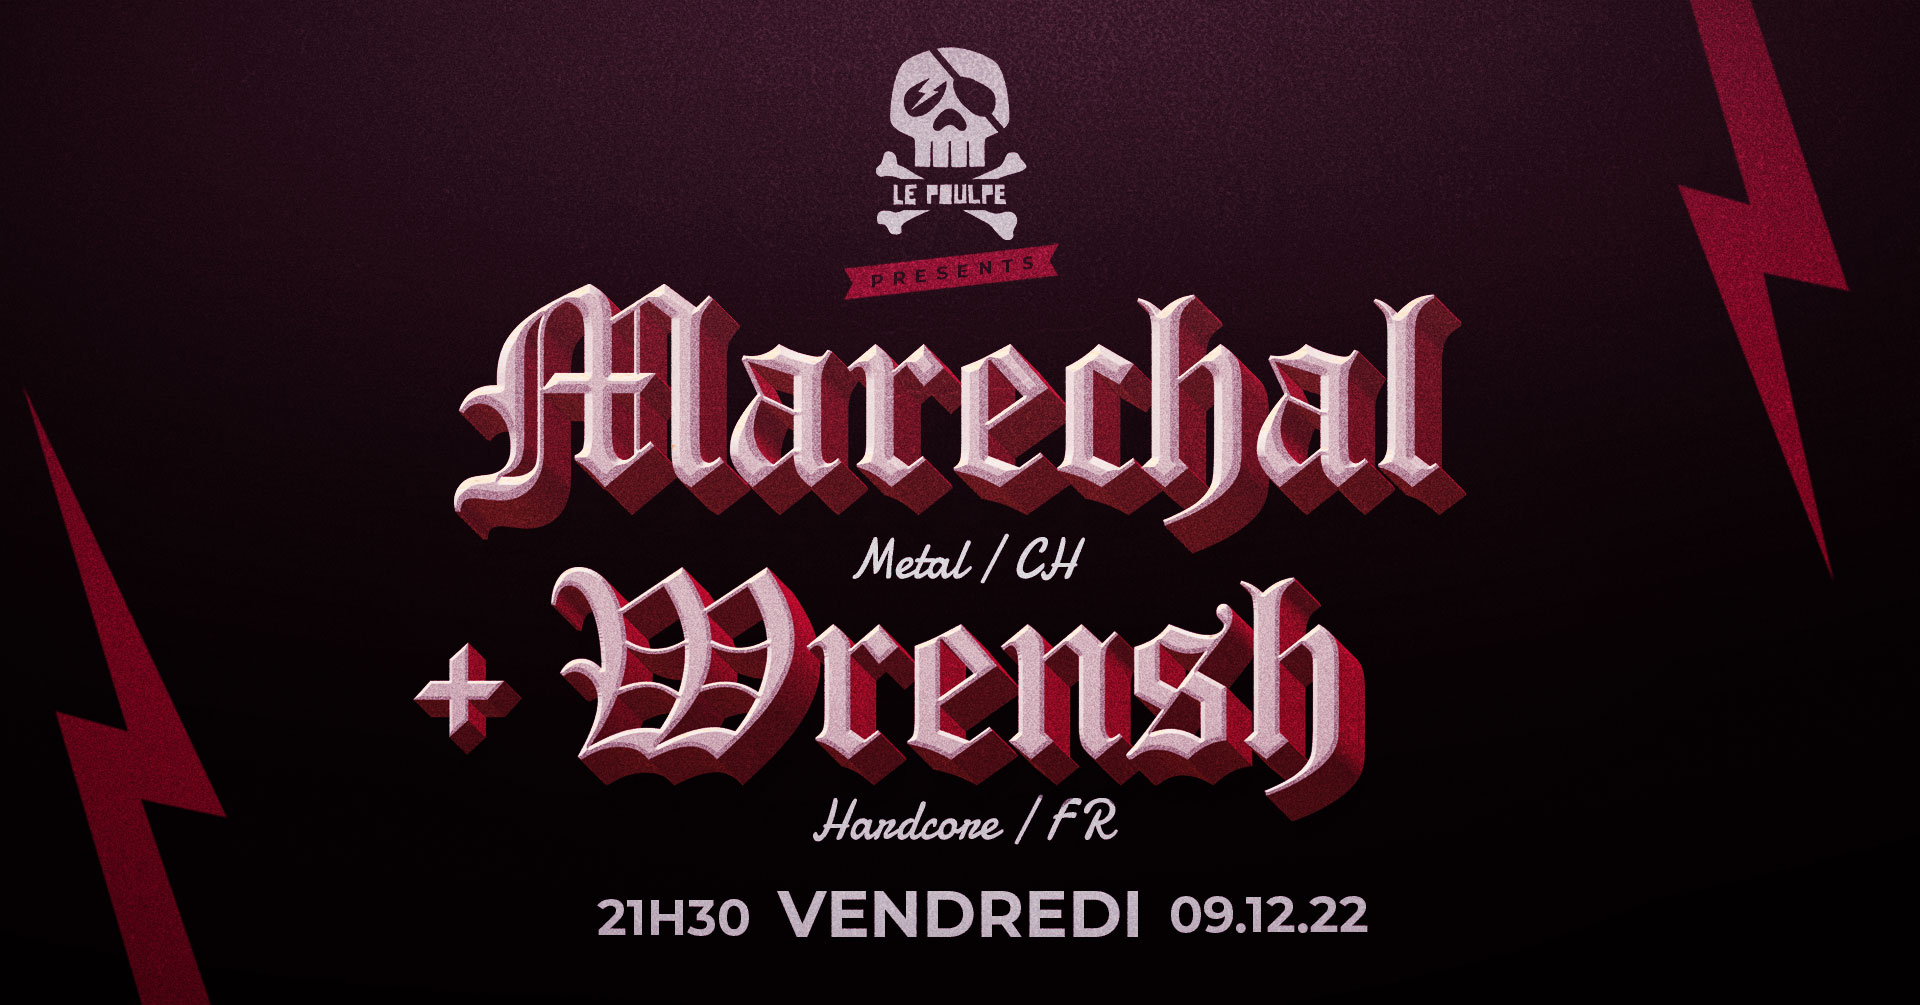 Wrensh (HxC / FR) + Marechal (Metal / CH) @ Le Poulpe